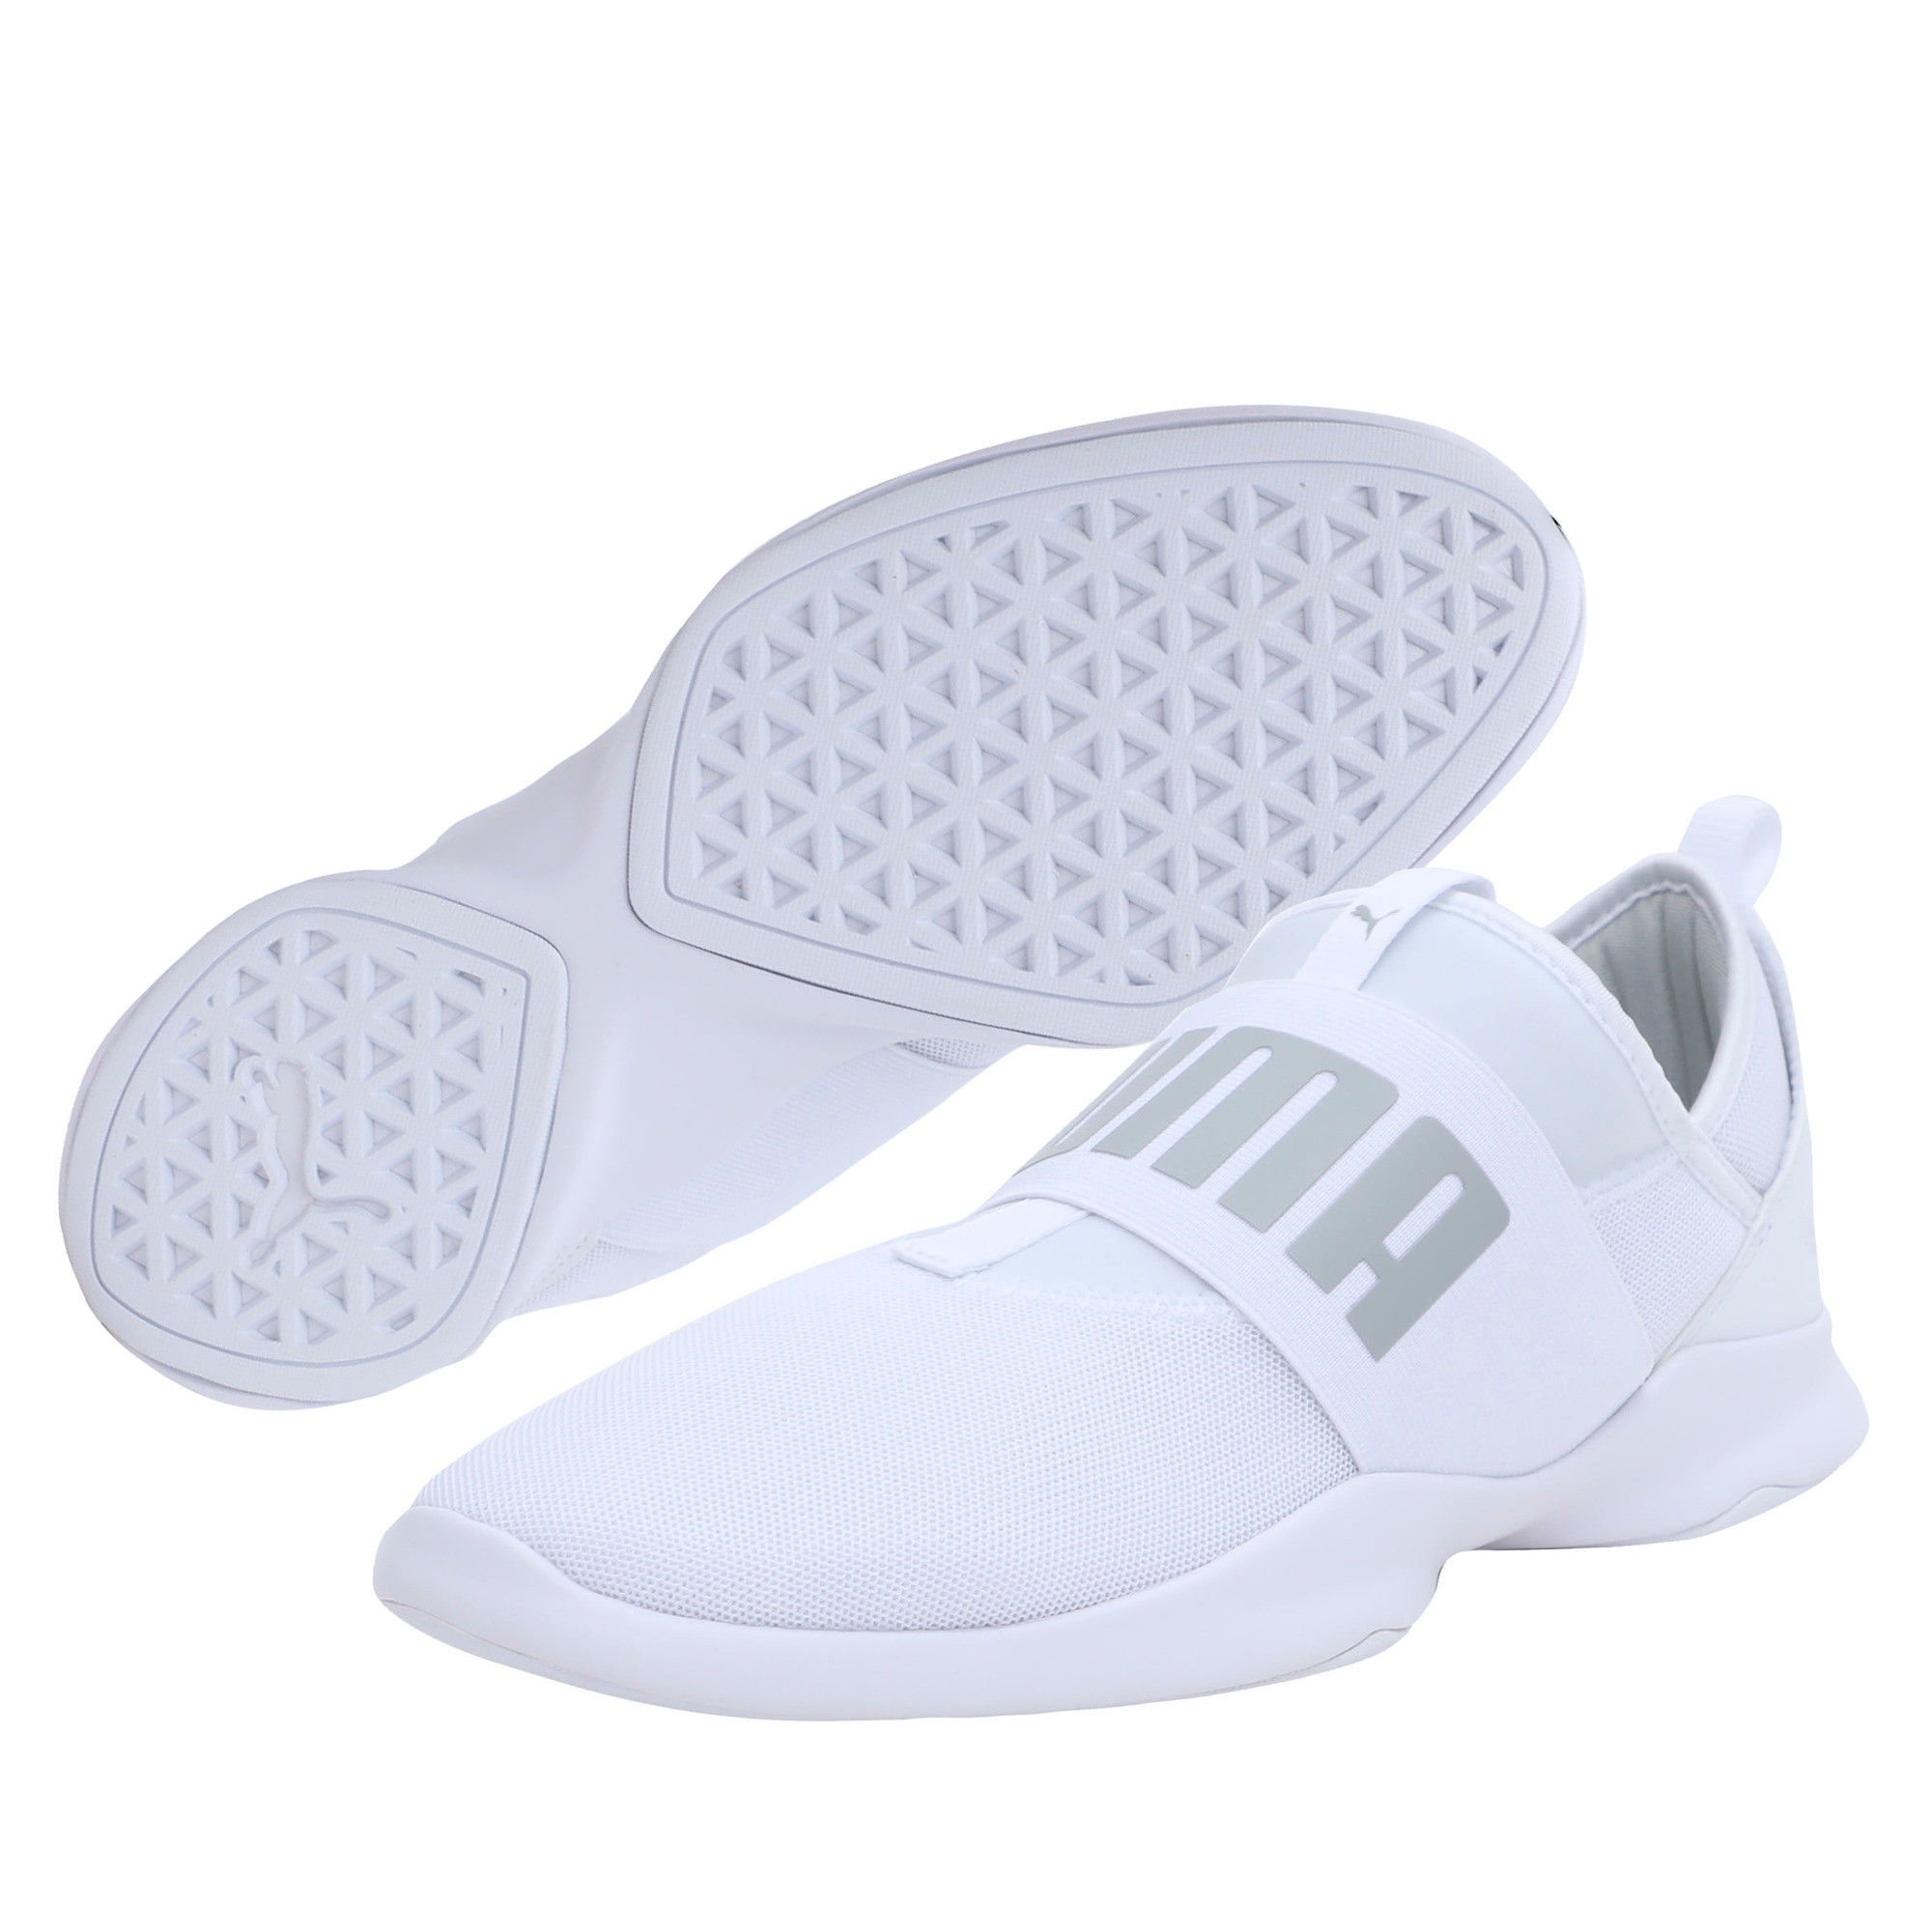 Puma Dare Unisex White Sneakers: Buy 